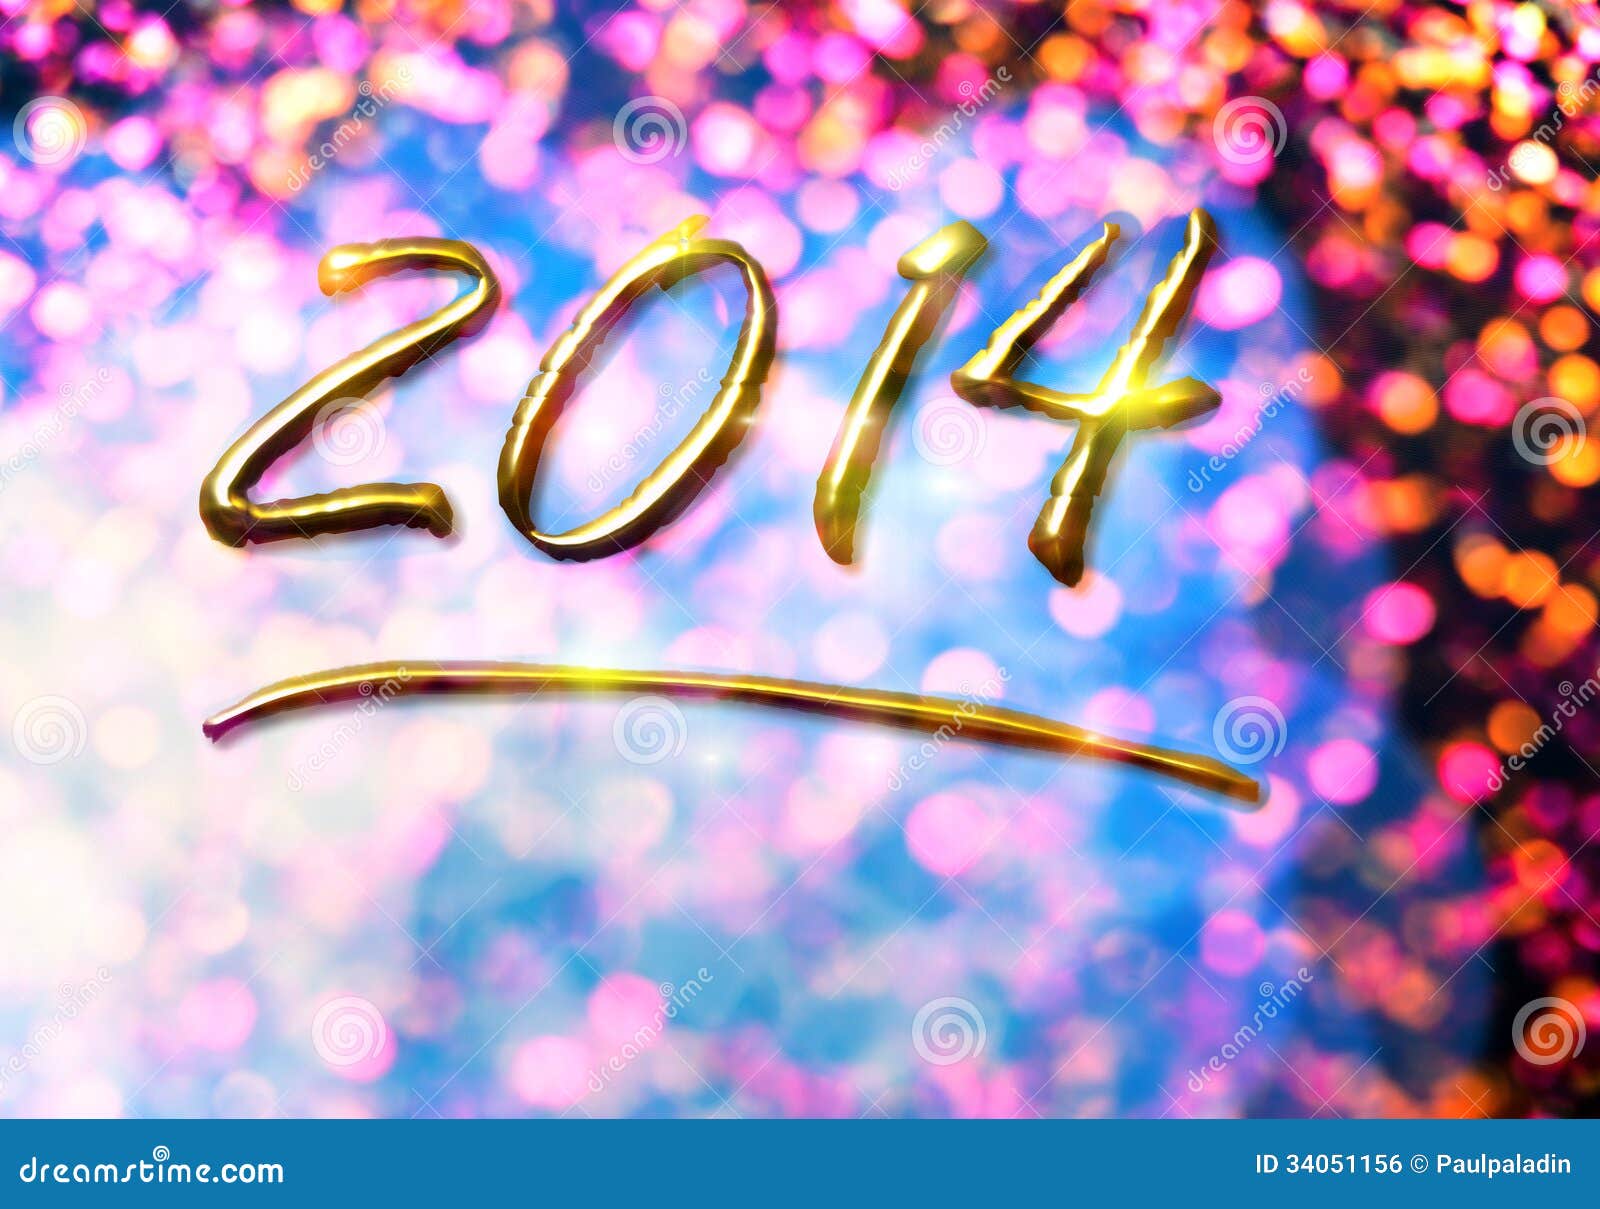 happy new year 2014 clipart animated - photo #50